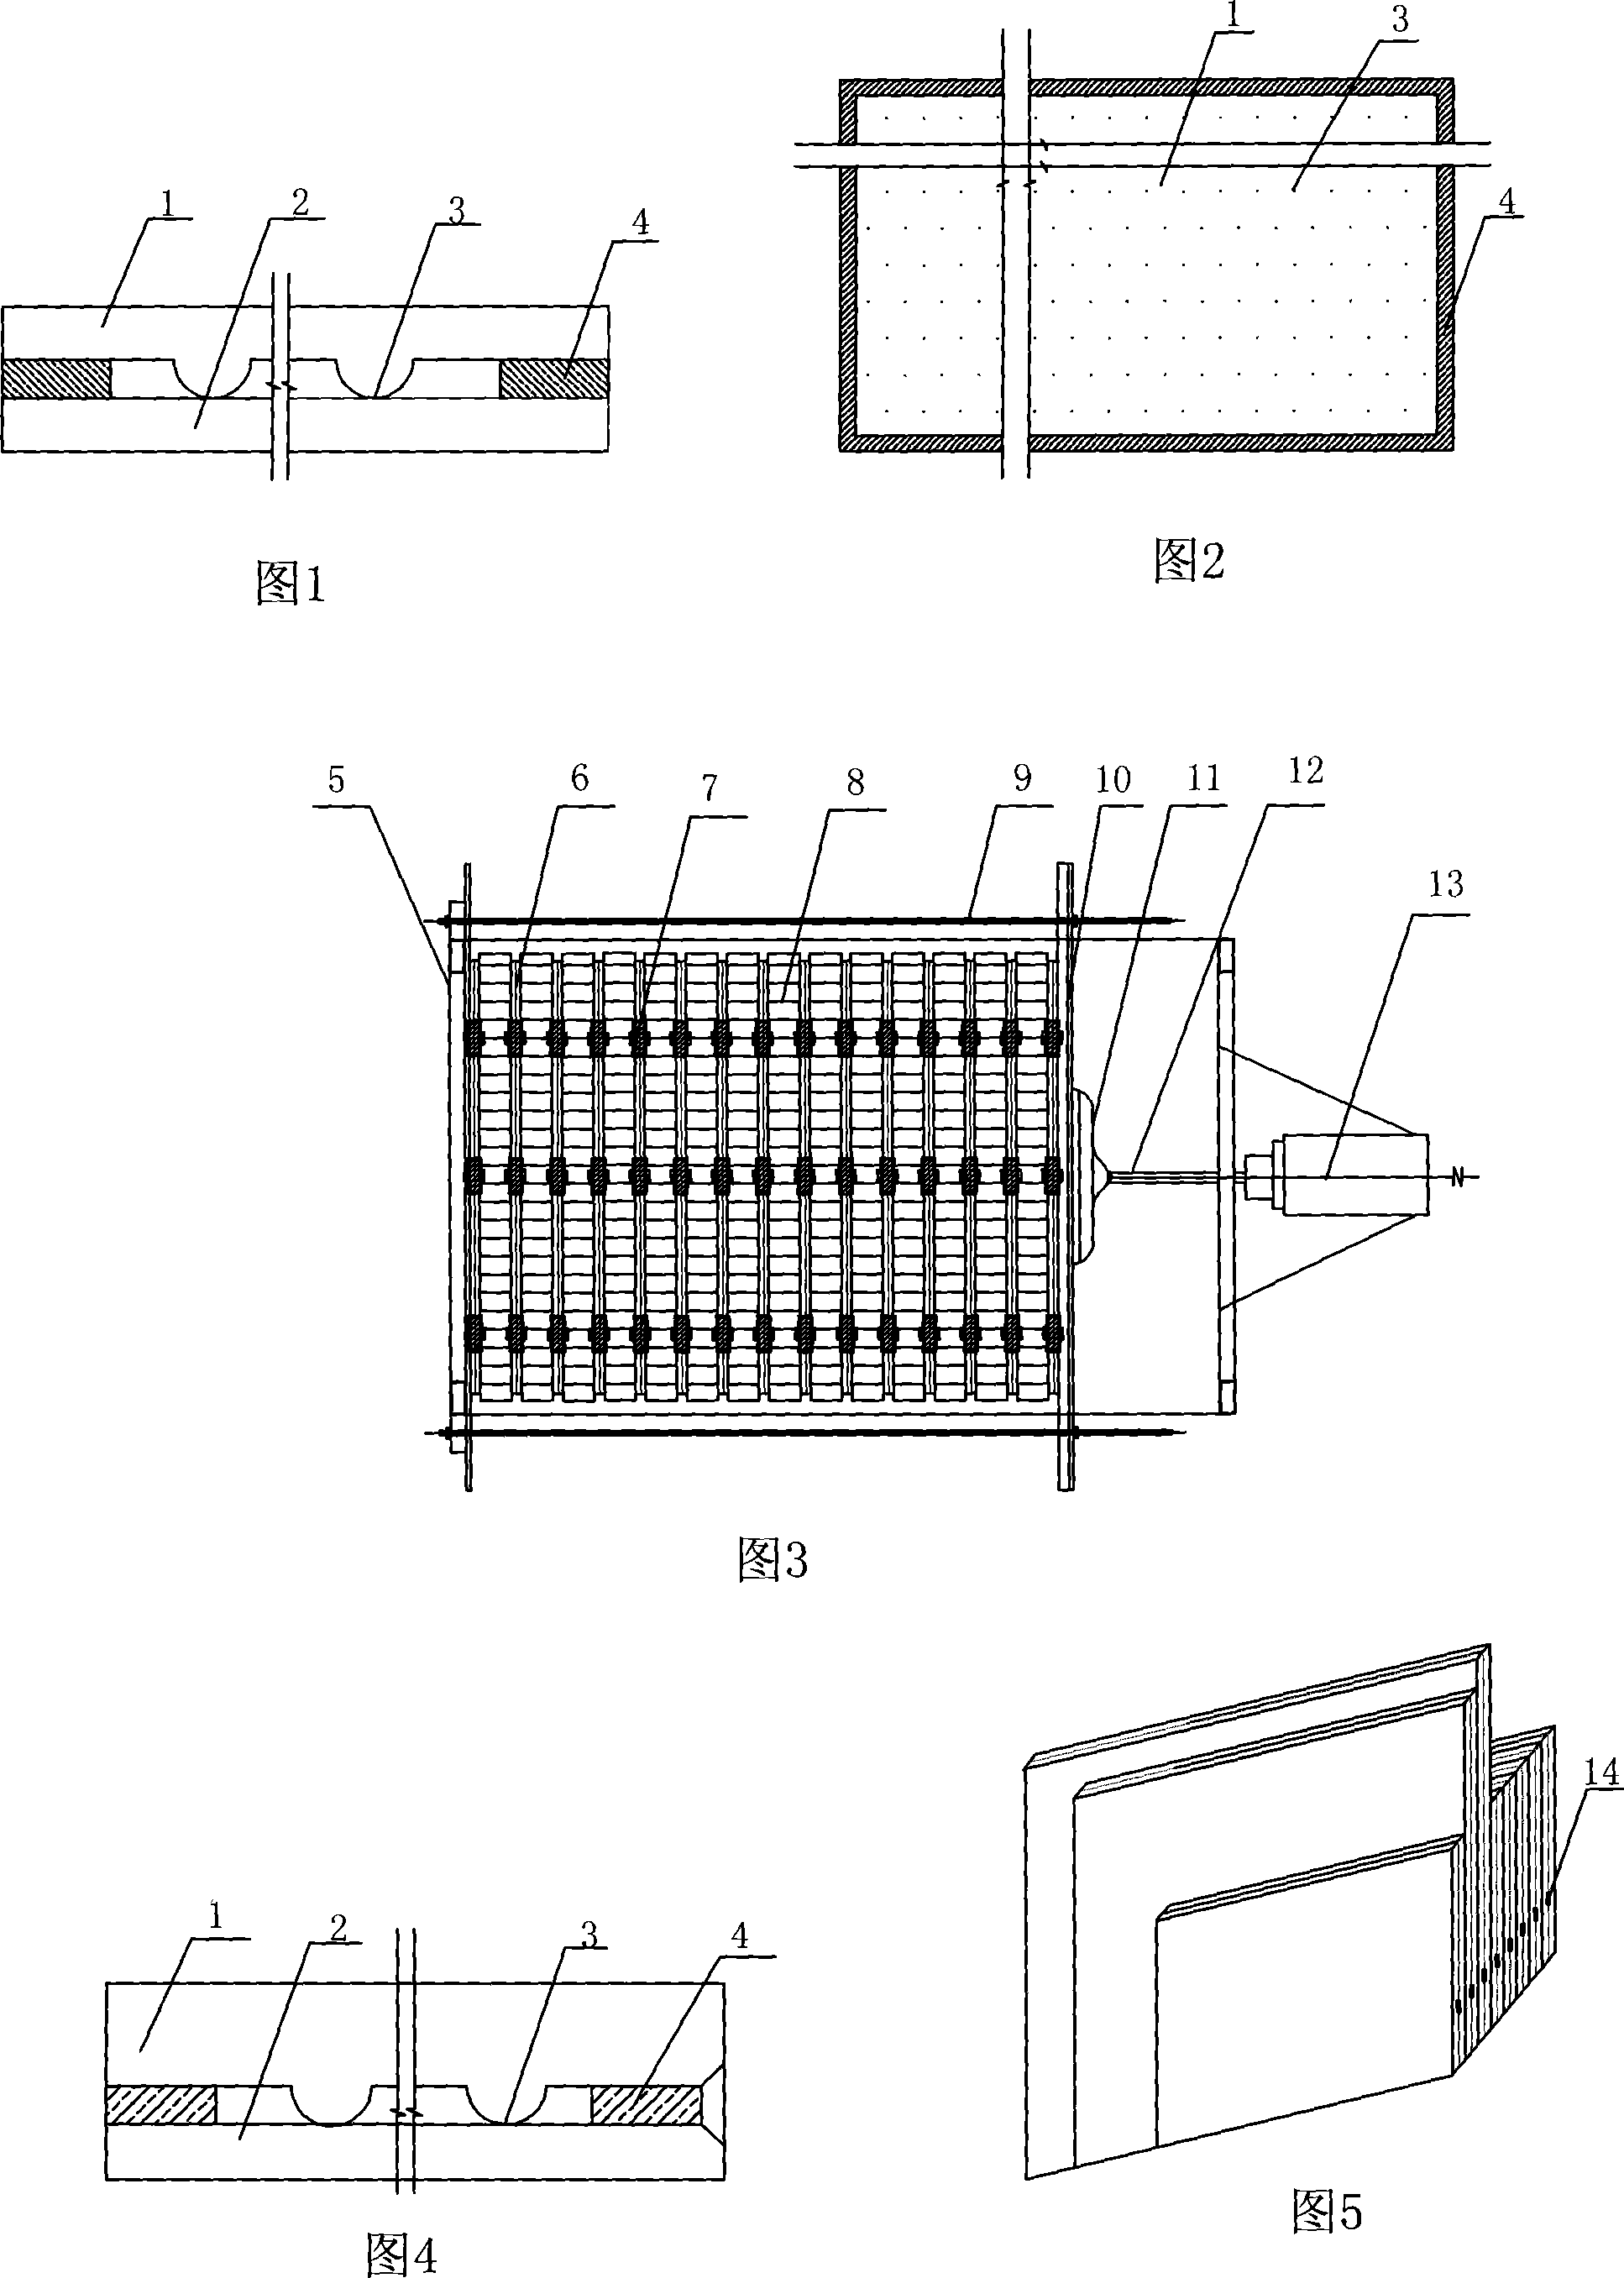 Method for manufacturing vacuum glass